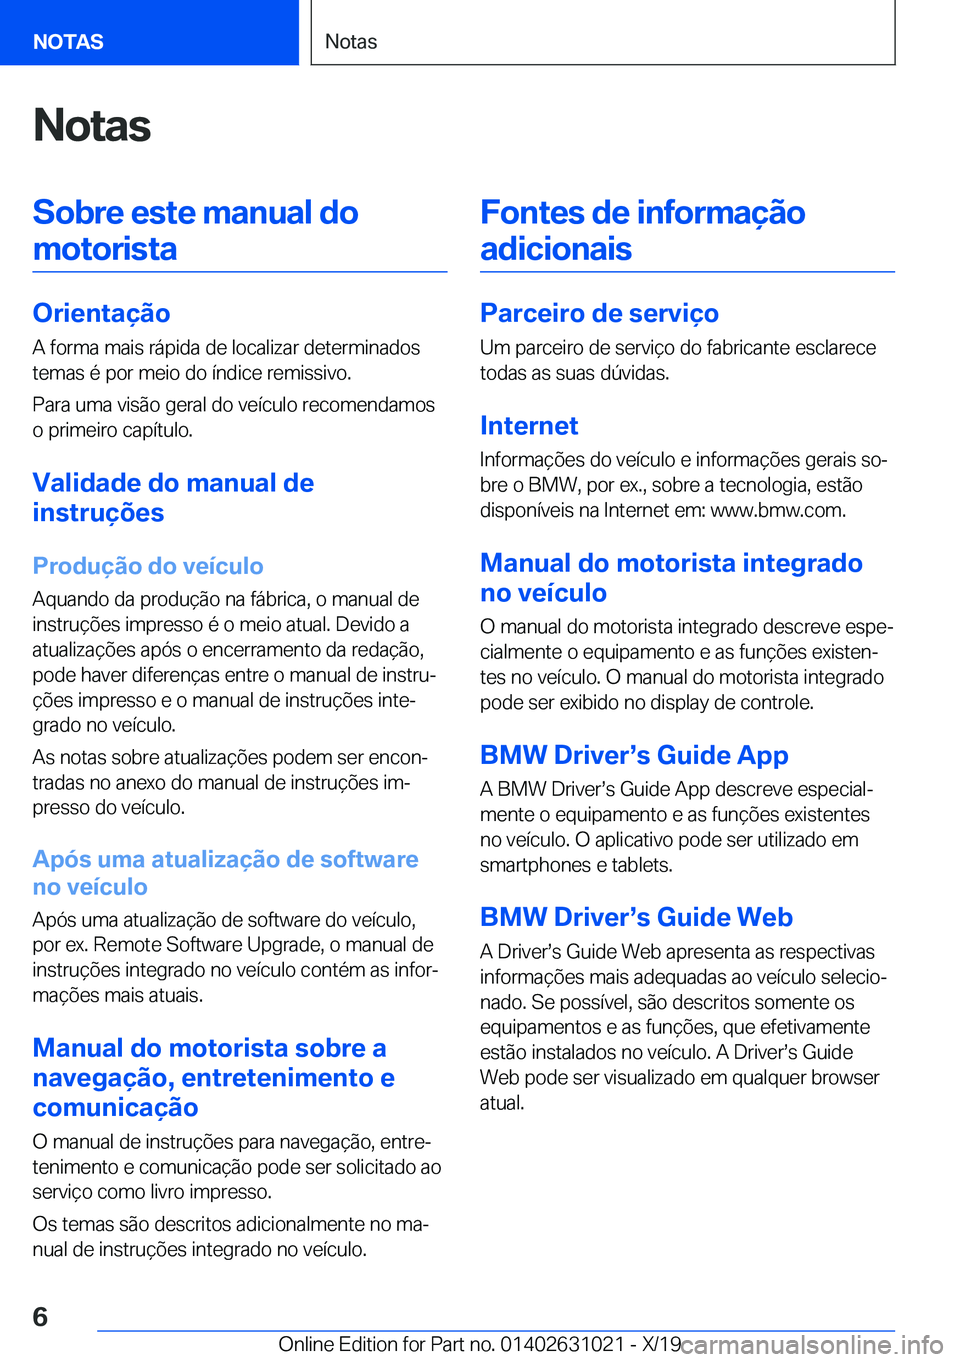 BMW 2 SERIES GRAN COUPE 2020  Manual do condutor (in Portuguese) �N�o�t�a�s�S�o�b�r�e��e�s�t�e��m�a�n�u�a�l��d�o�m�o�t�o�r�i�s�t�a
�O�r�i�e�n�t�a�